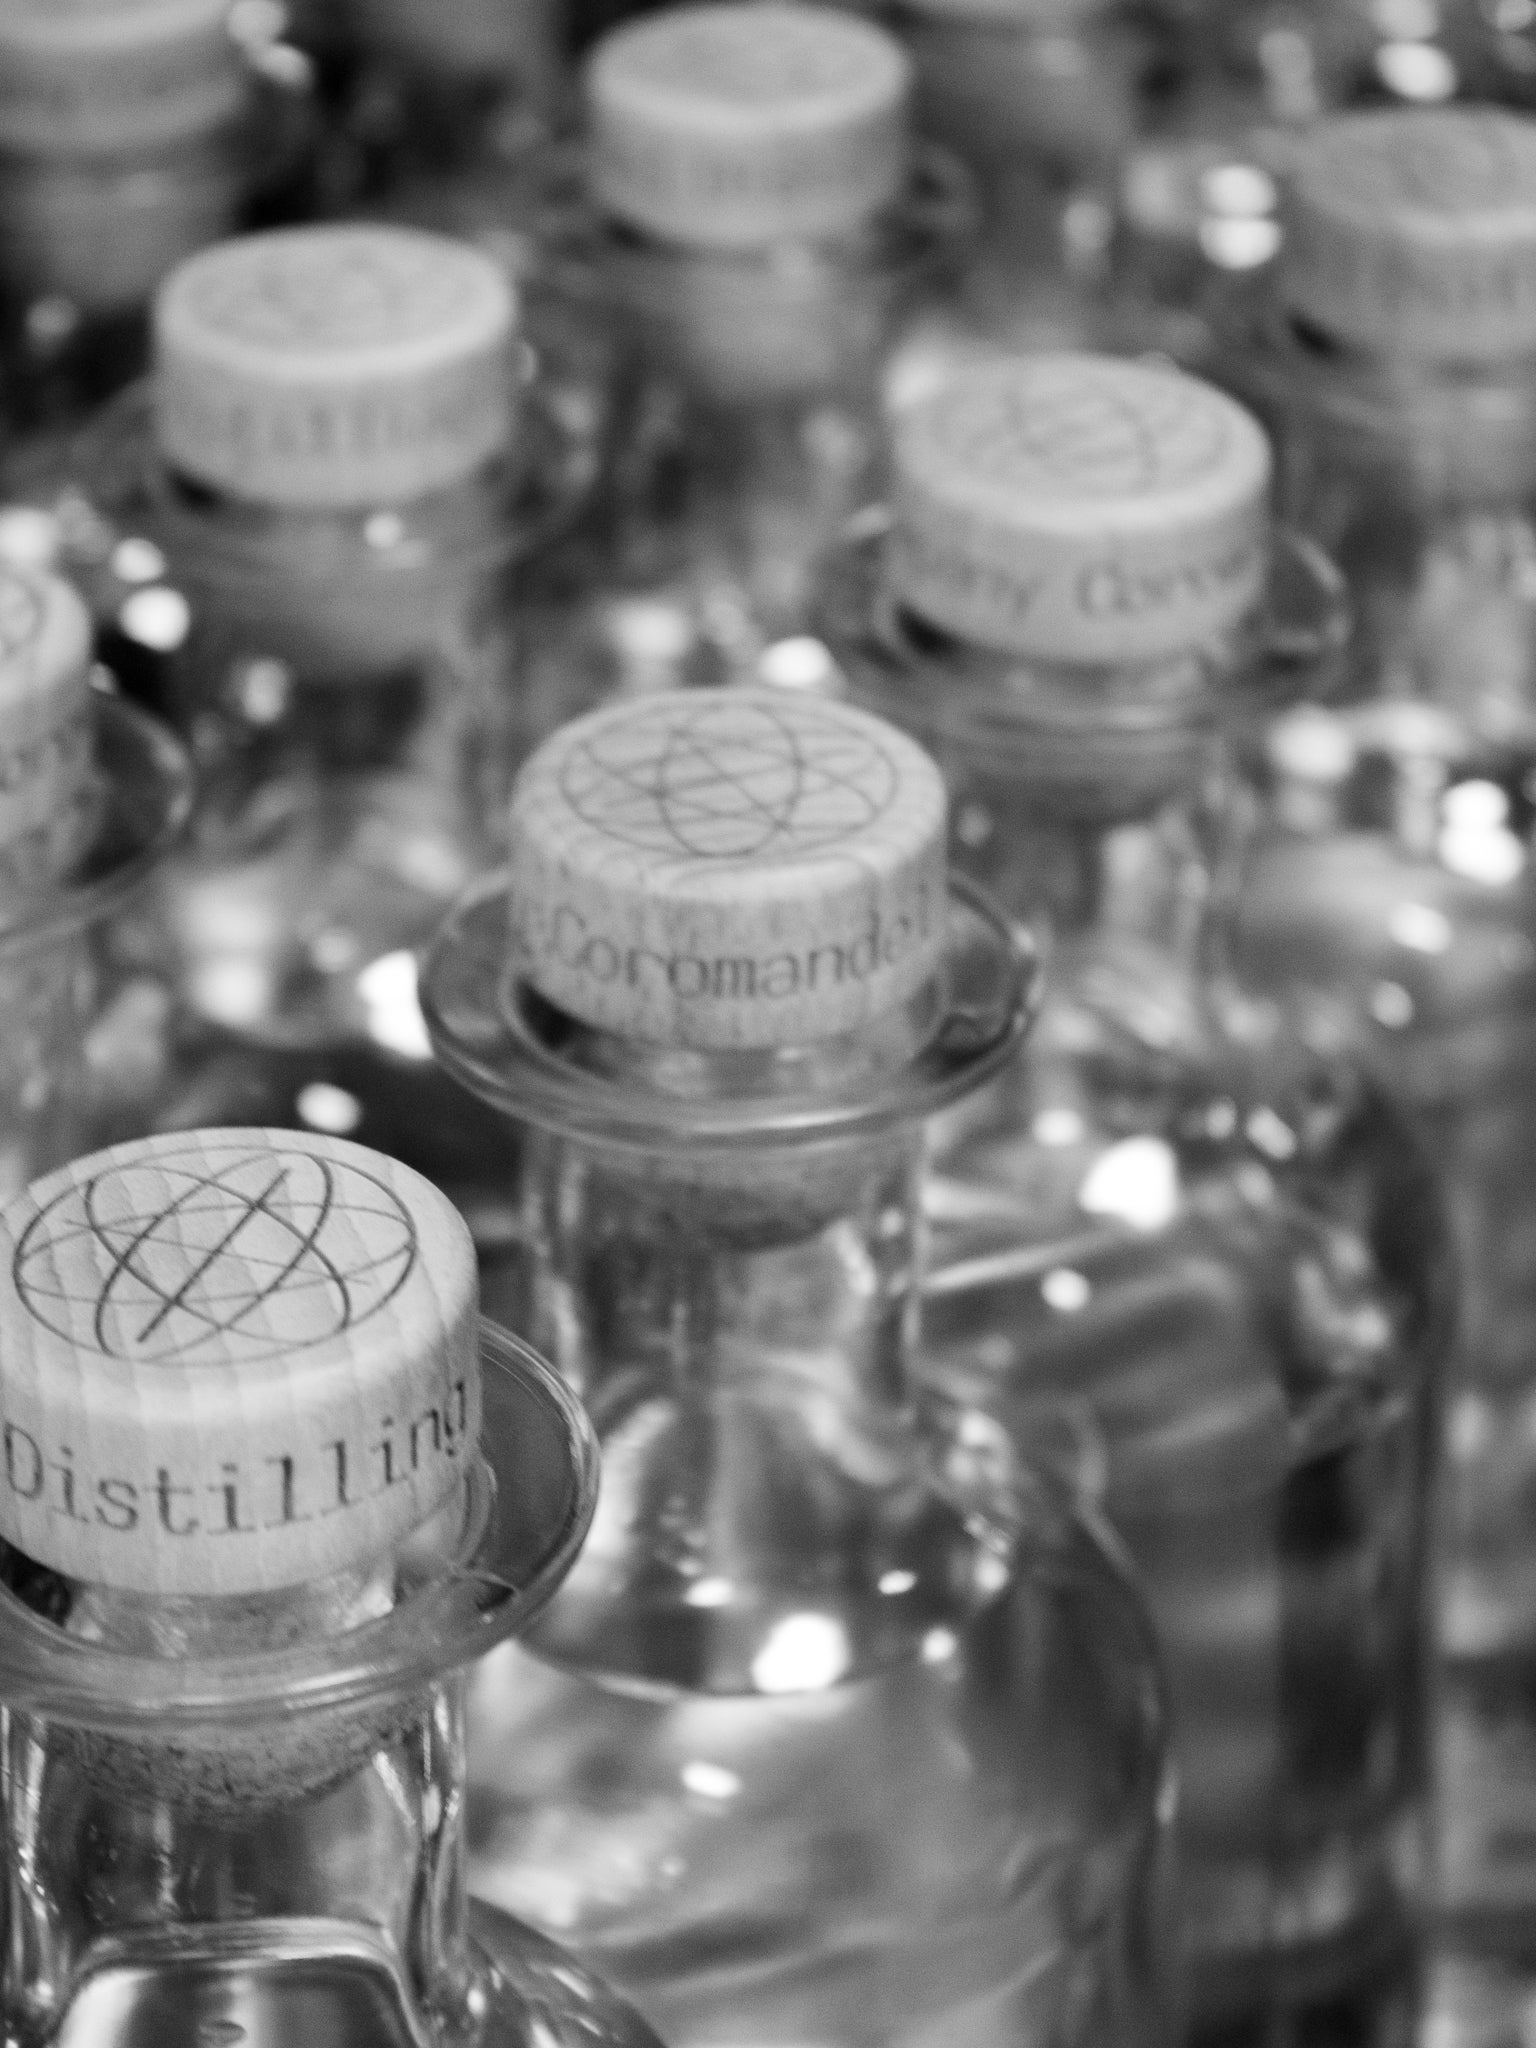 The Coromandel Distilling Company distills in micro-batches to ensure quality